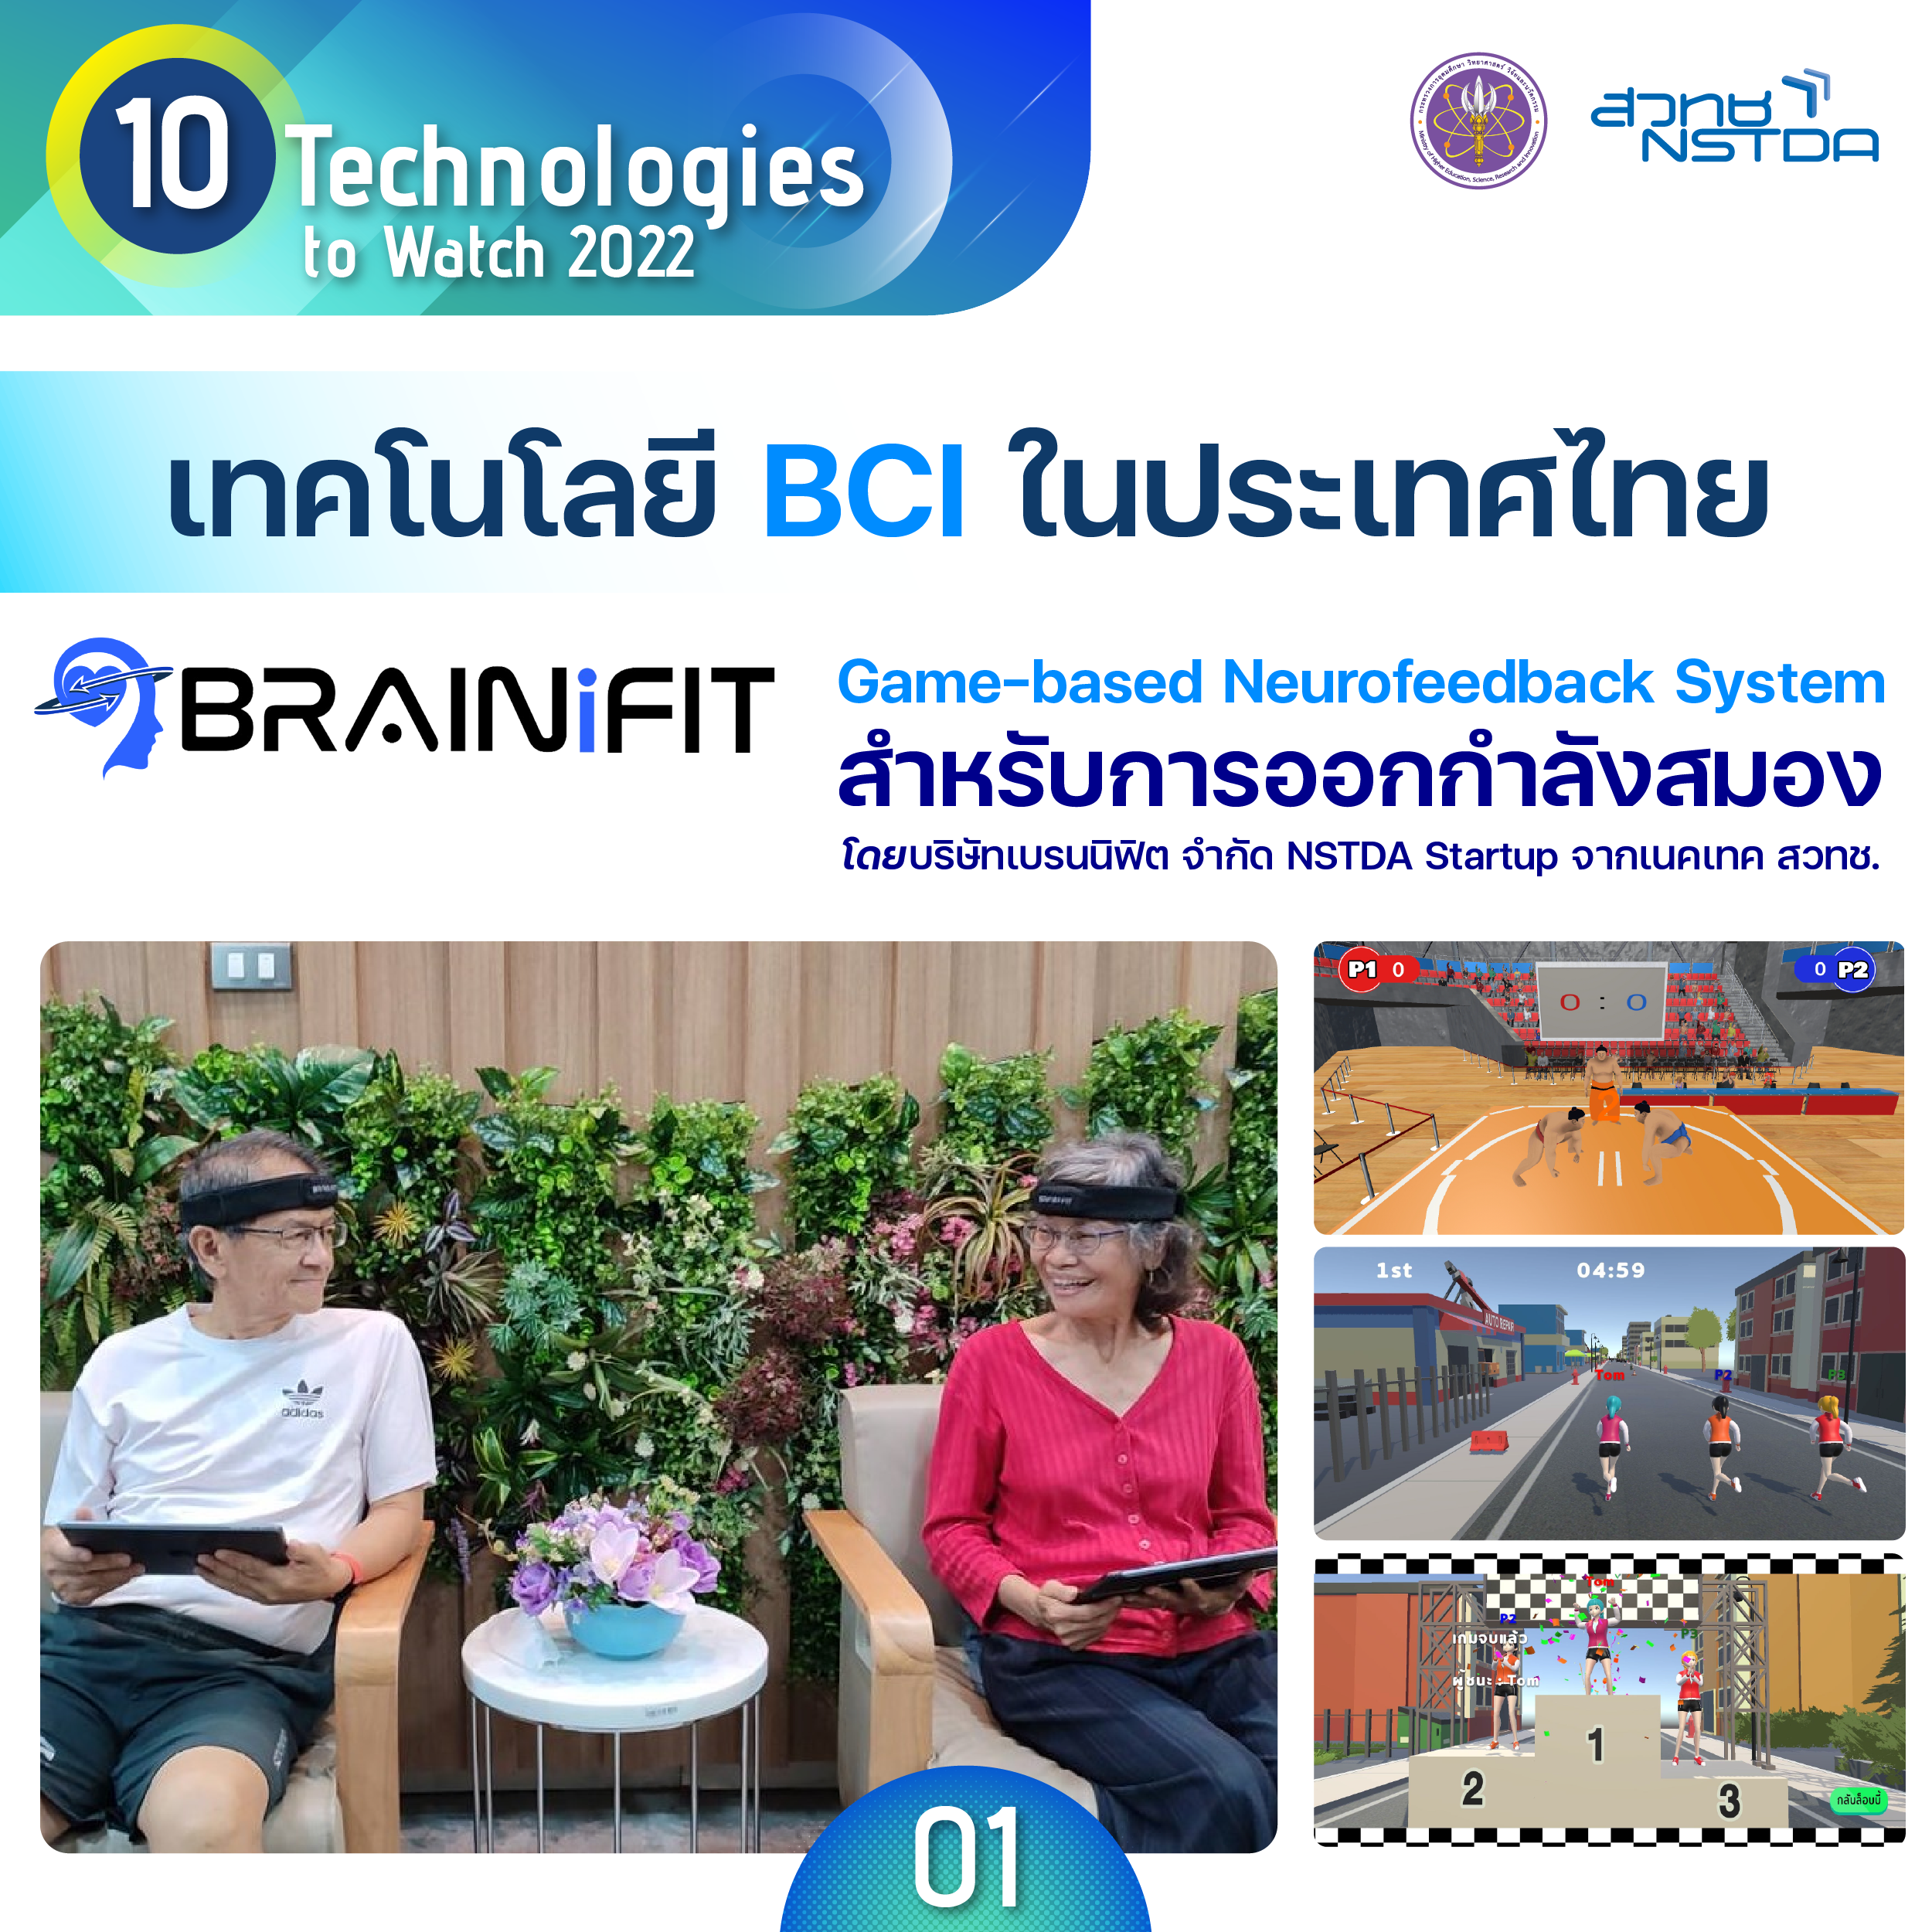 Brain-Computer Interface (BCI) เทคโนโลยีเชื่อมต่อสมองมนุษย์กับคอมพิวเตอร์